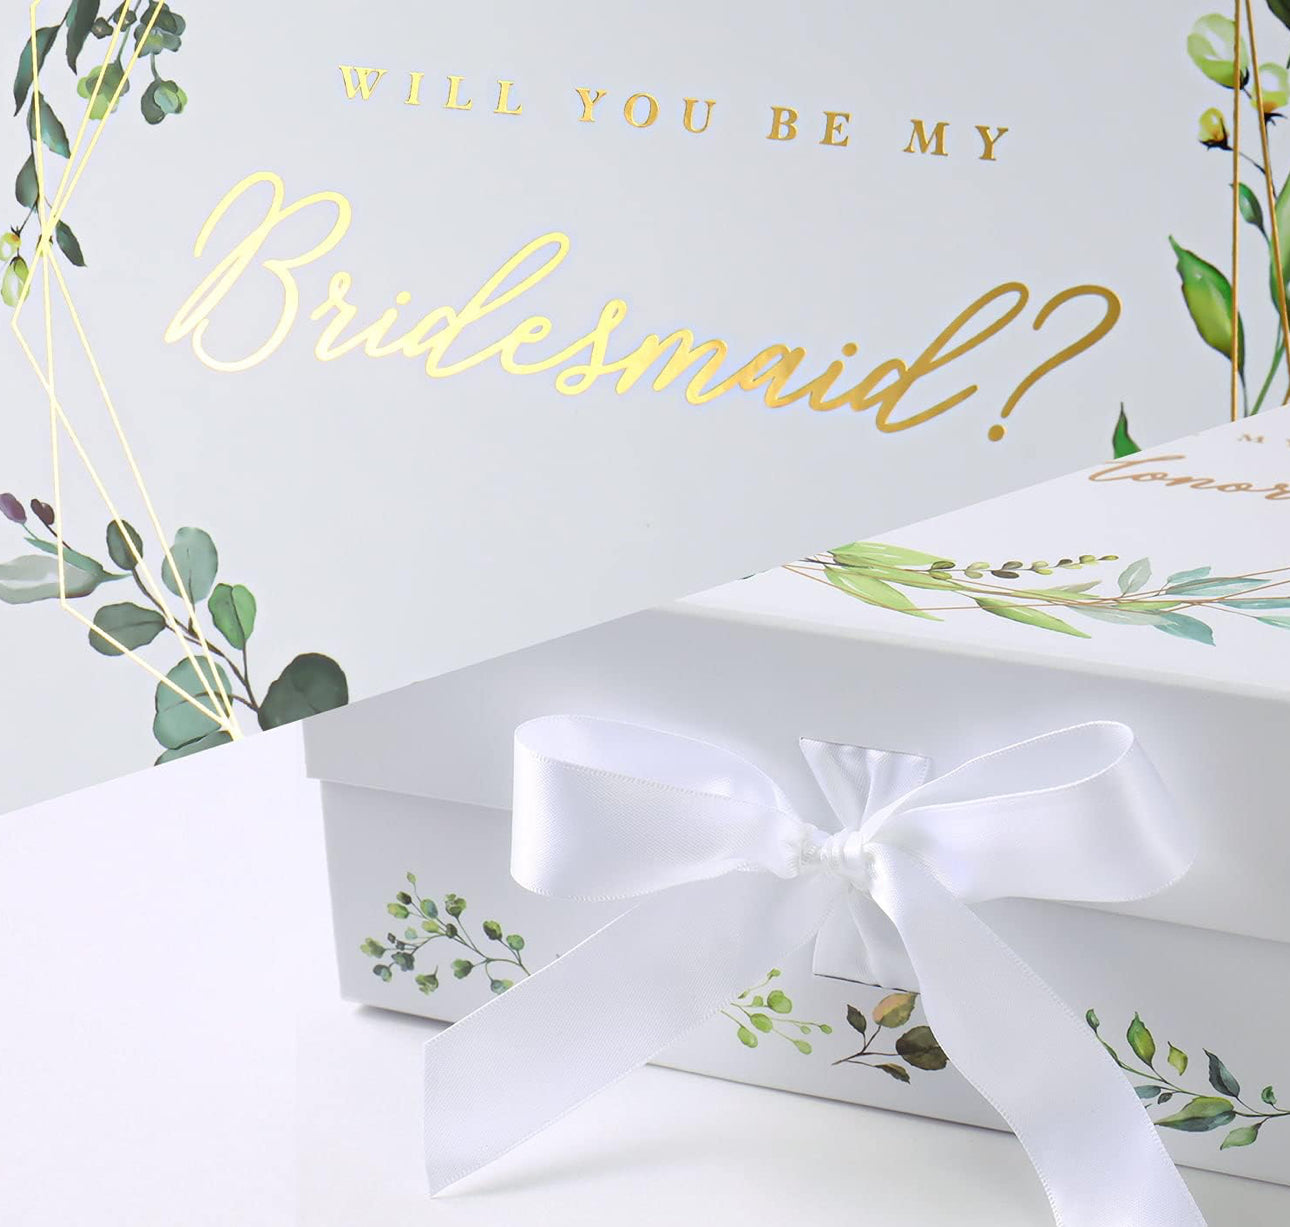 BRIGEL Bridesmaid Proposal Box Set of 3, 3 Will You Be My Bridesmaid Proposal Boxes for Bridesmaid